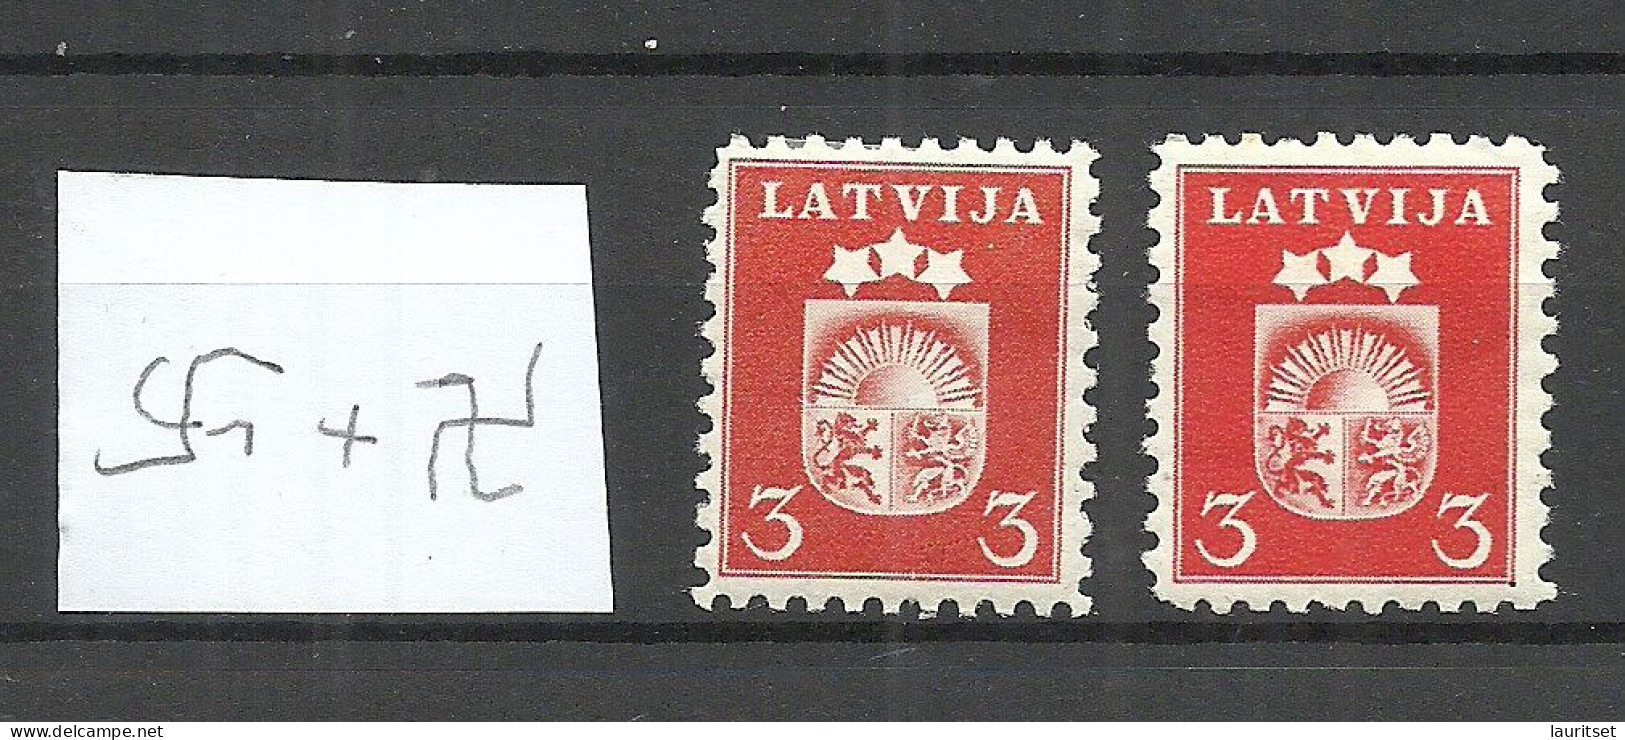 LETTLAND Latvia 1940 Michel 283 * Wm Normal + Inverted - Lettonie